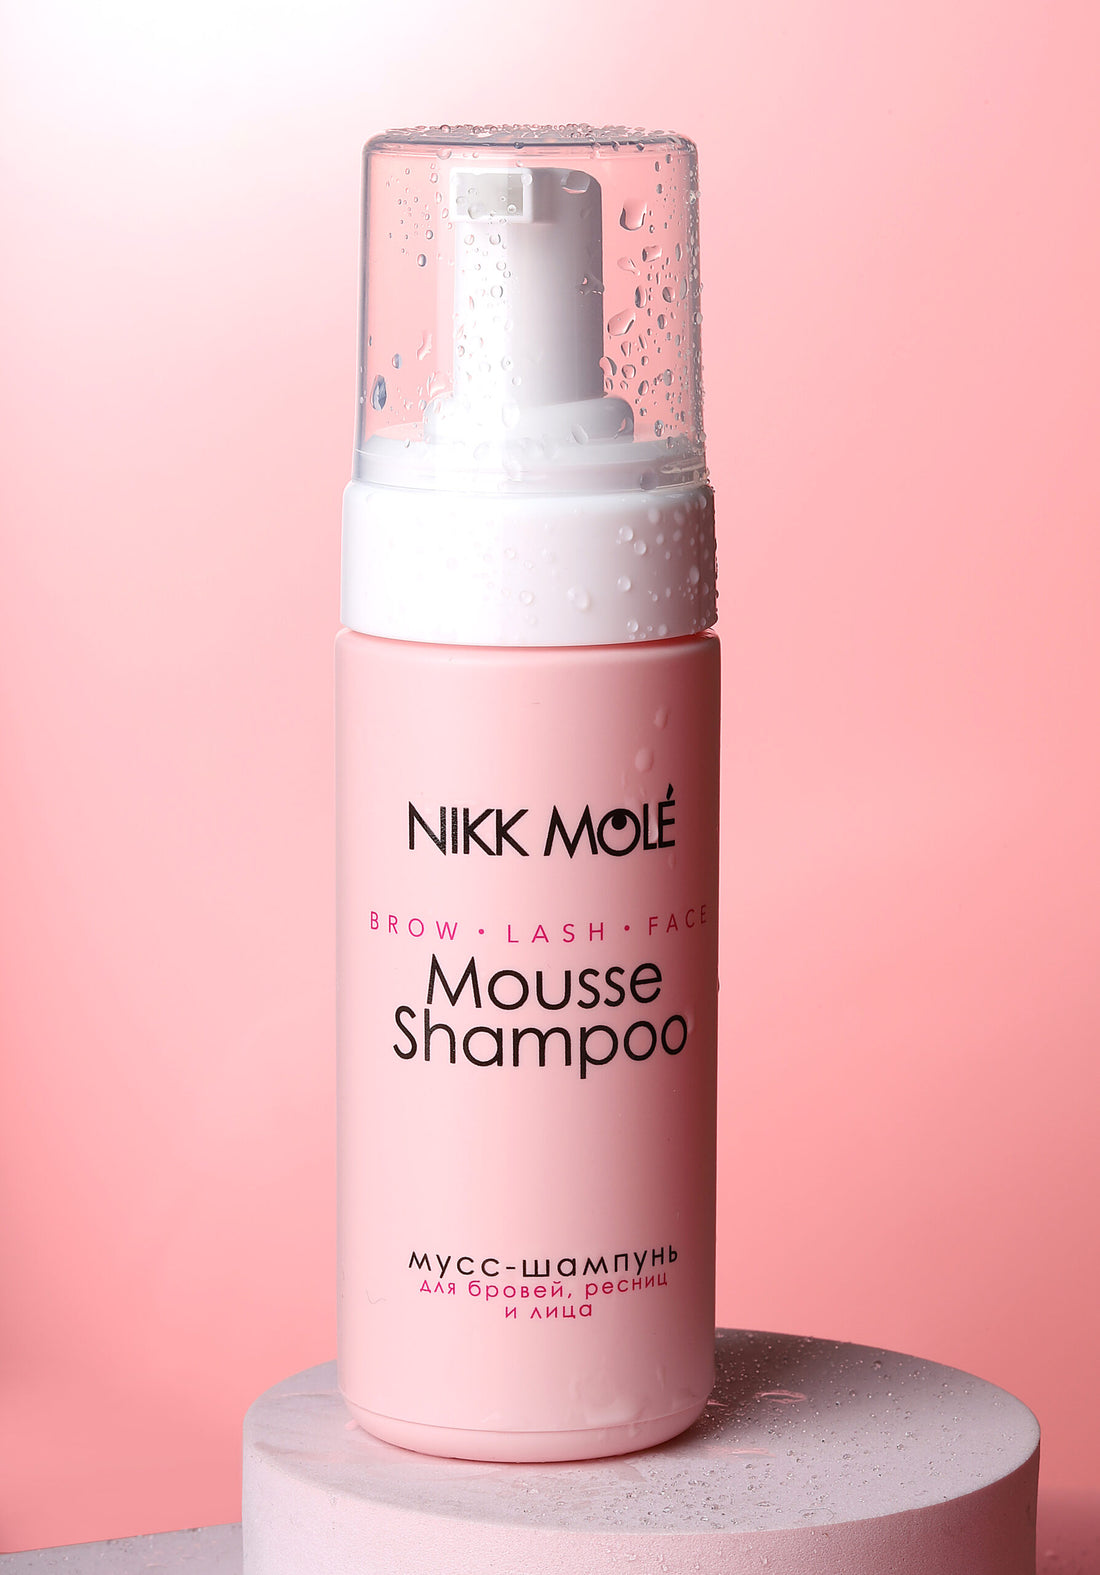 NIKK MOLÉ - Mousse Shampoo (125ML)